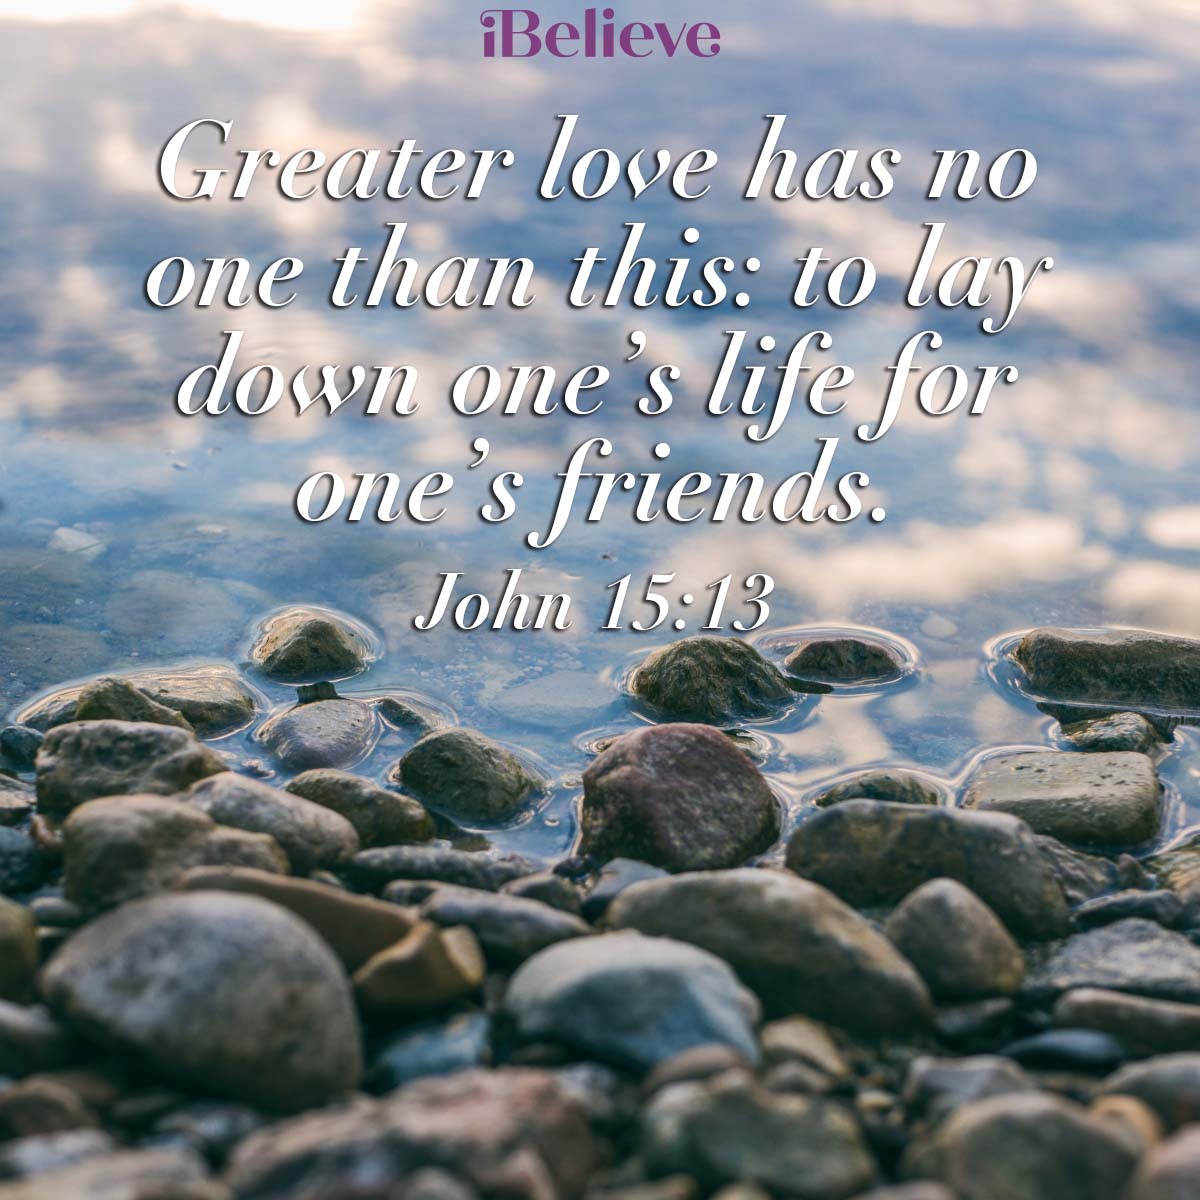 John 15:13, inspirational image